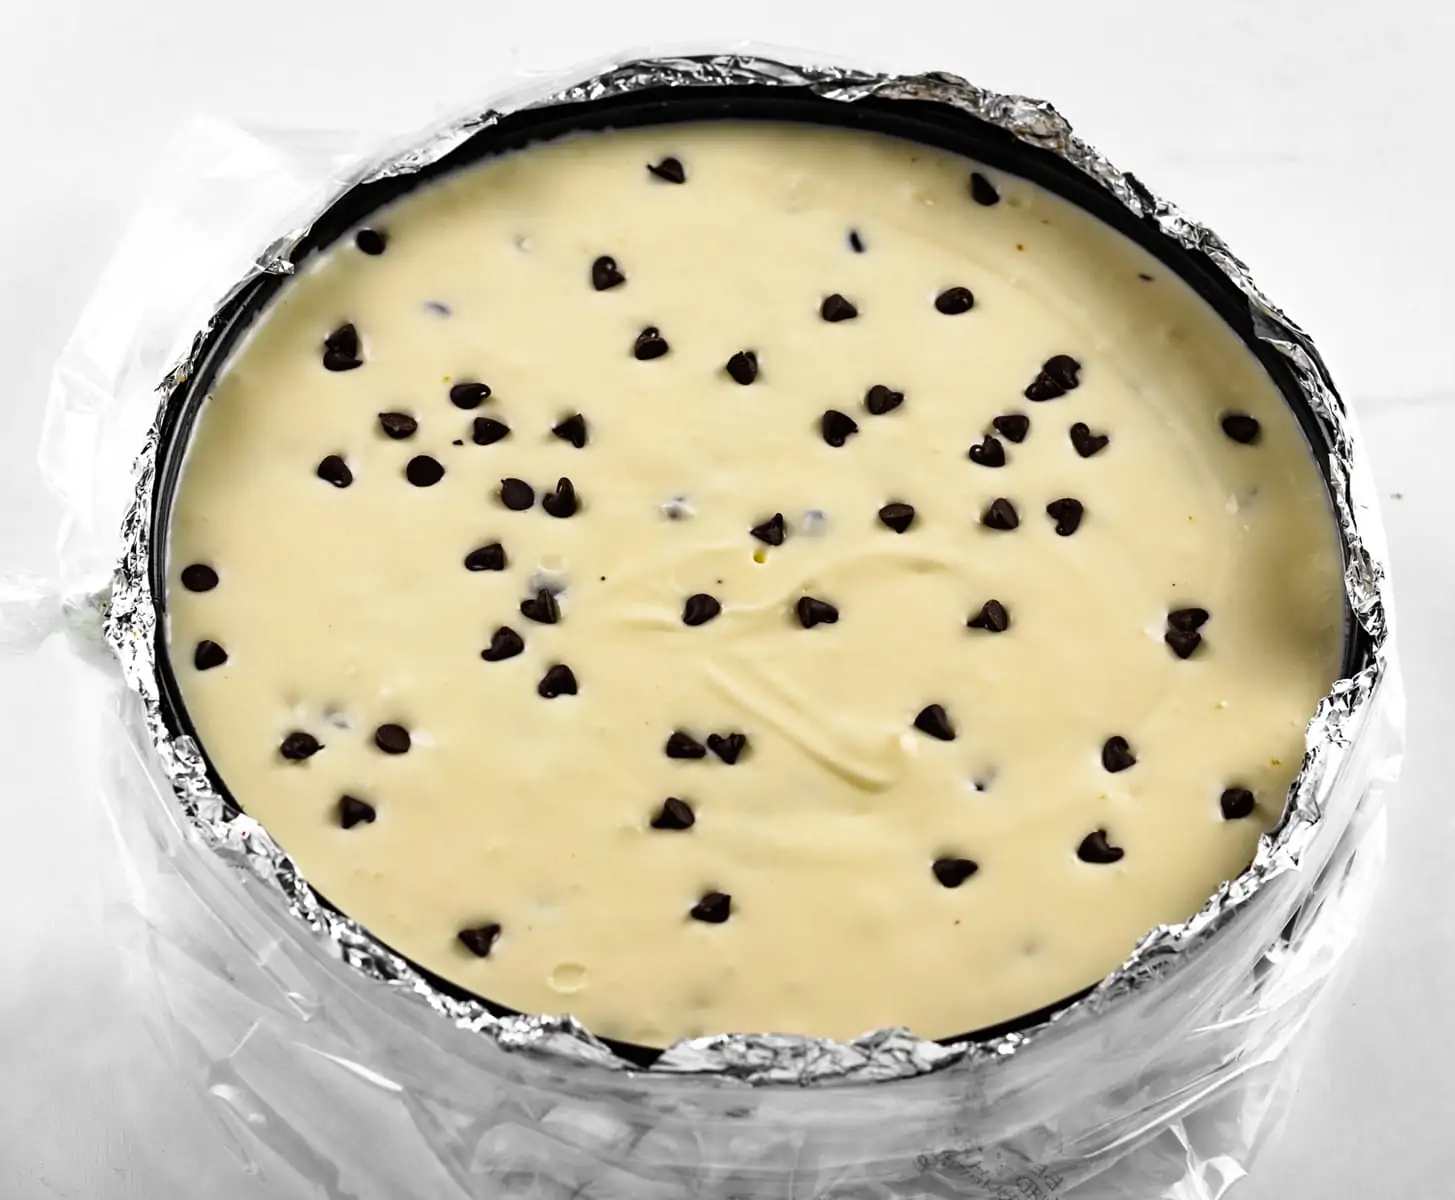 Chocolate Chip Cheesecake Batter in Springform Pan Prebaked